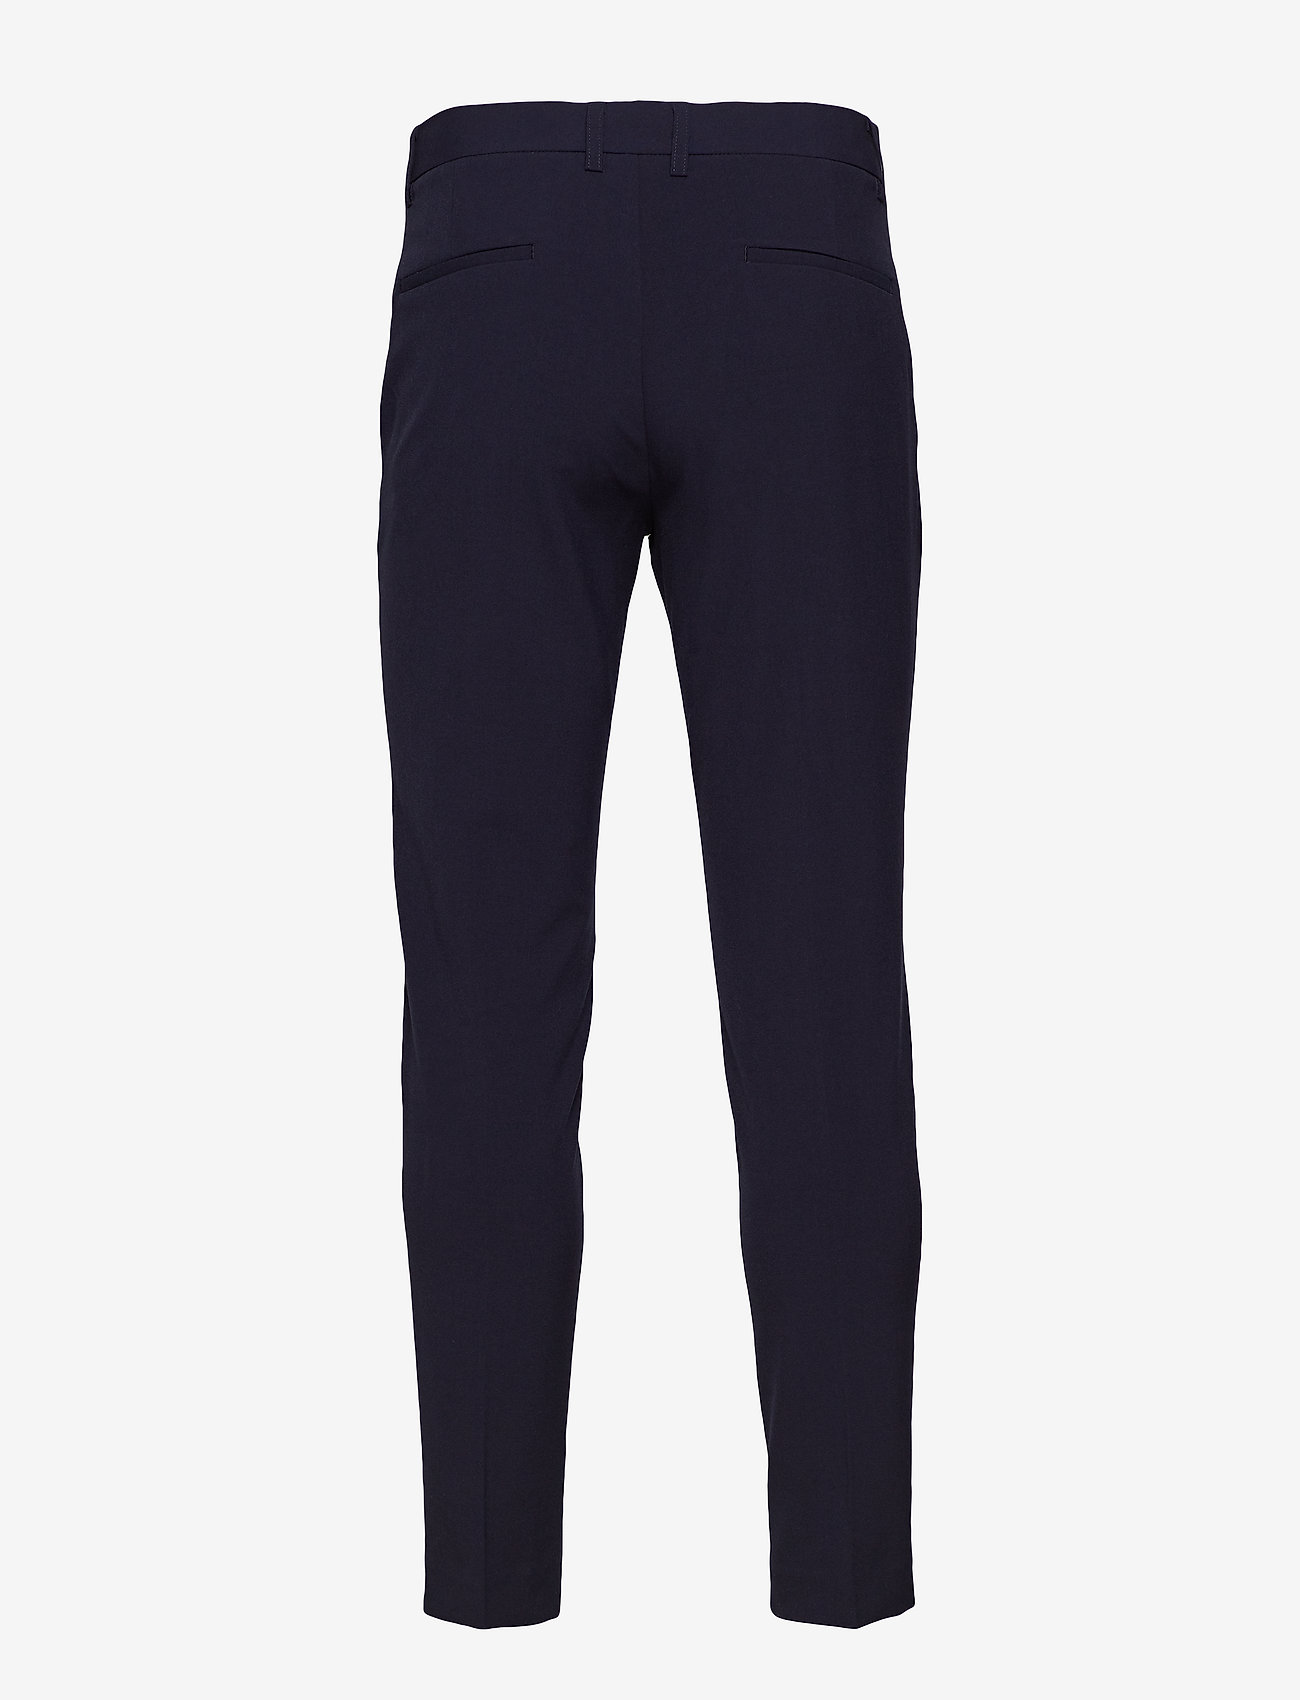 Lindbergh - Club pants - suit trousers - navy - 1